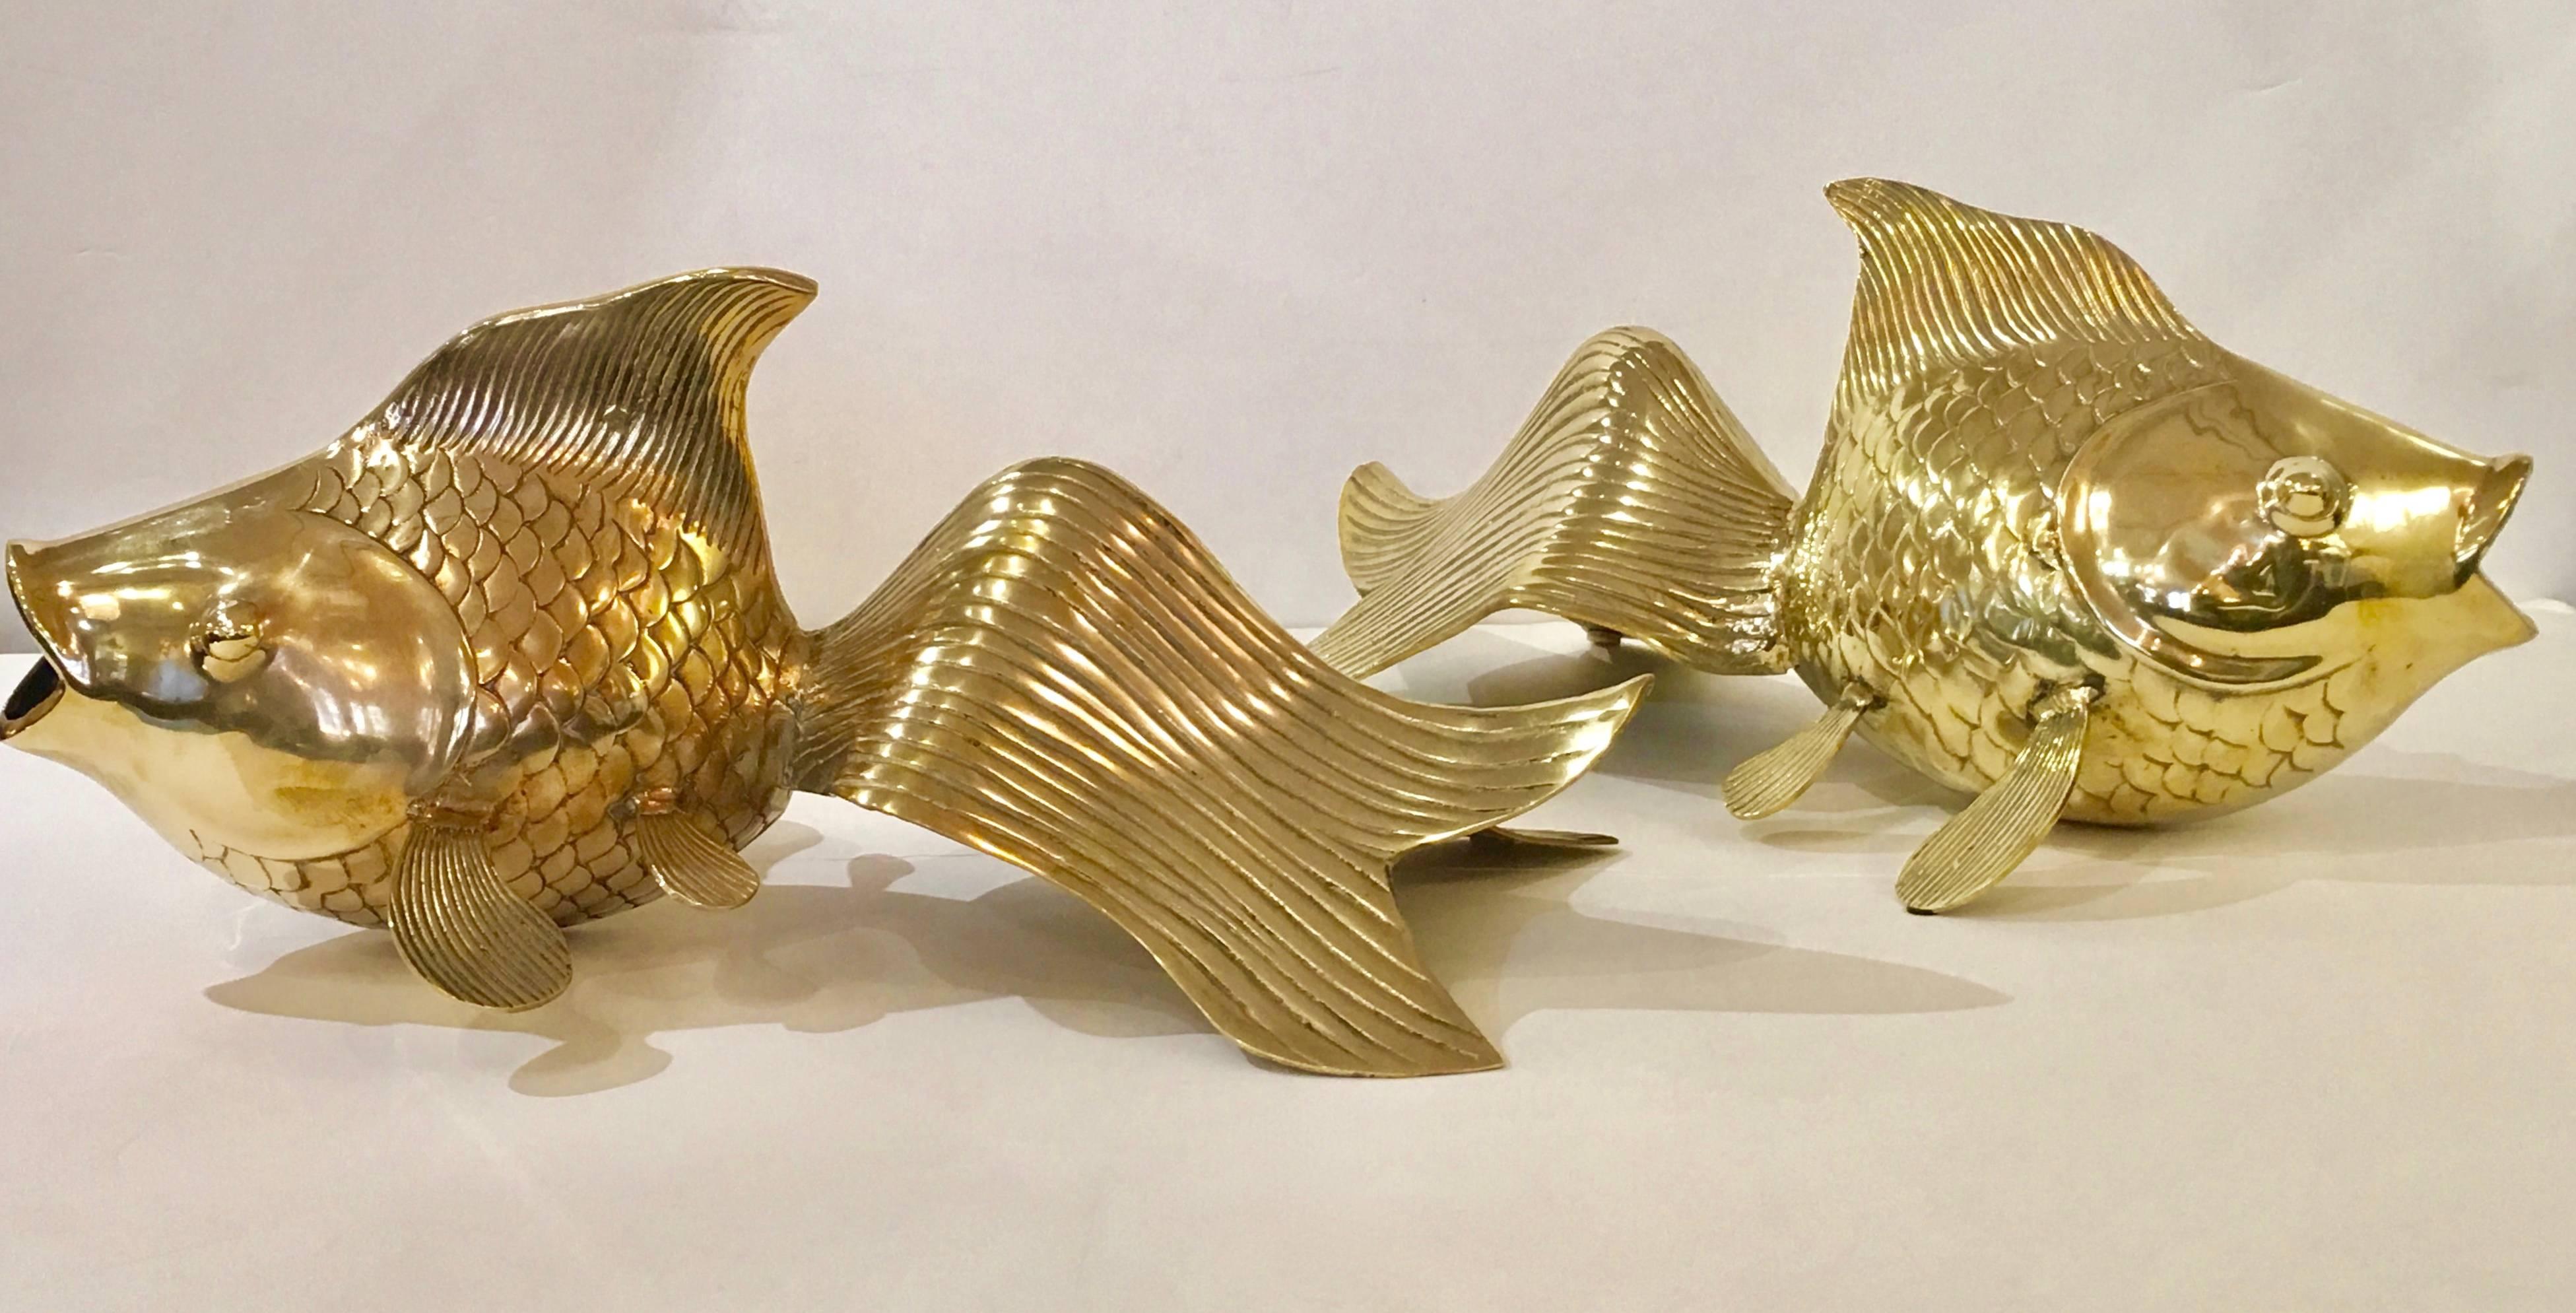 Hollywood Regency Pair of Monumental Koi Fish in Brass by Rosenthal